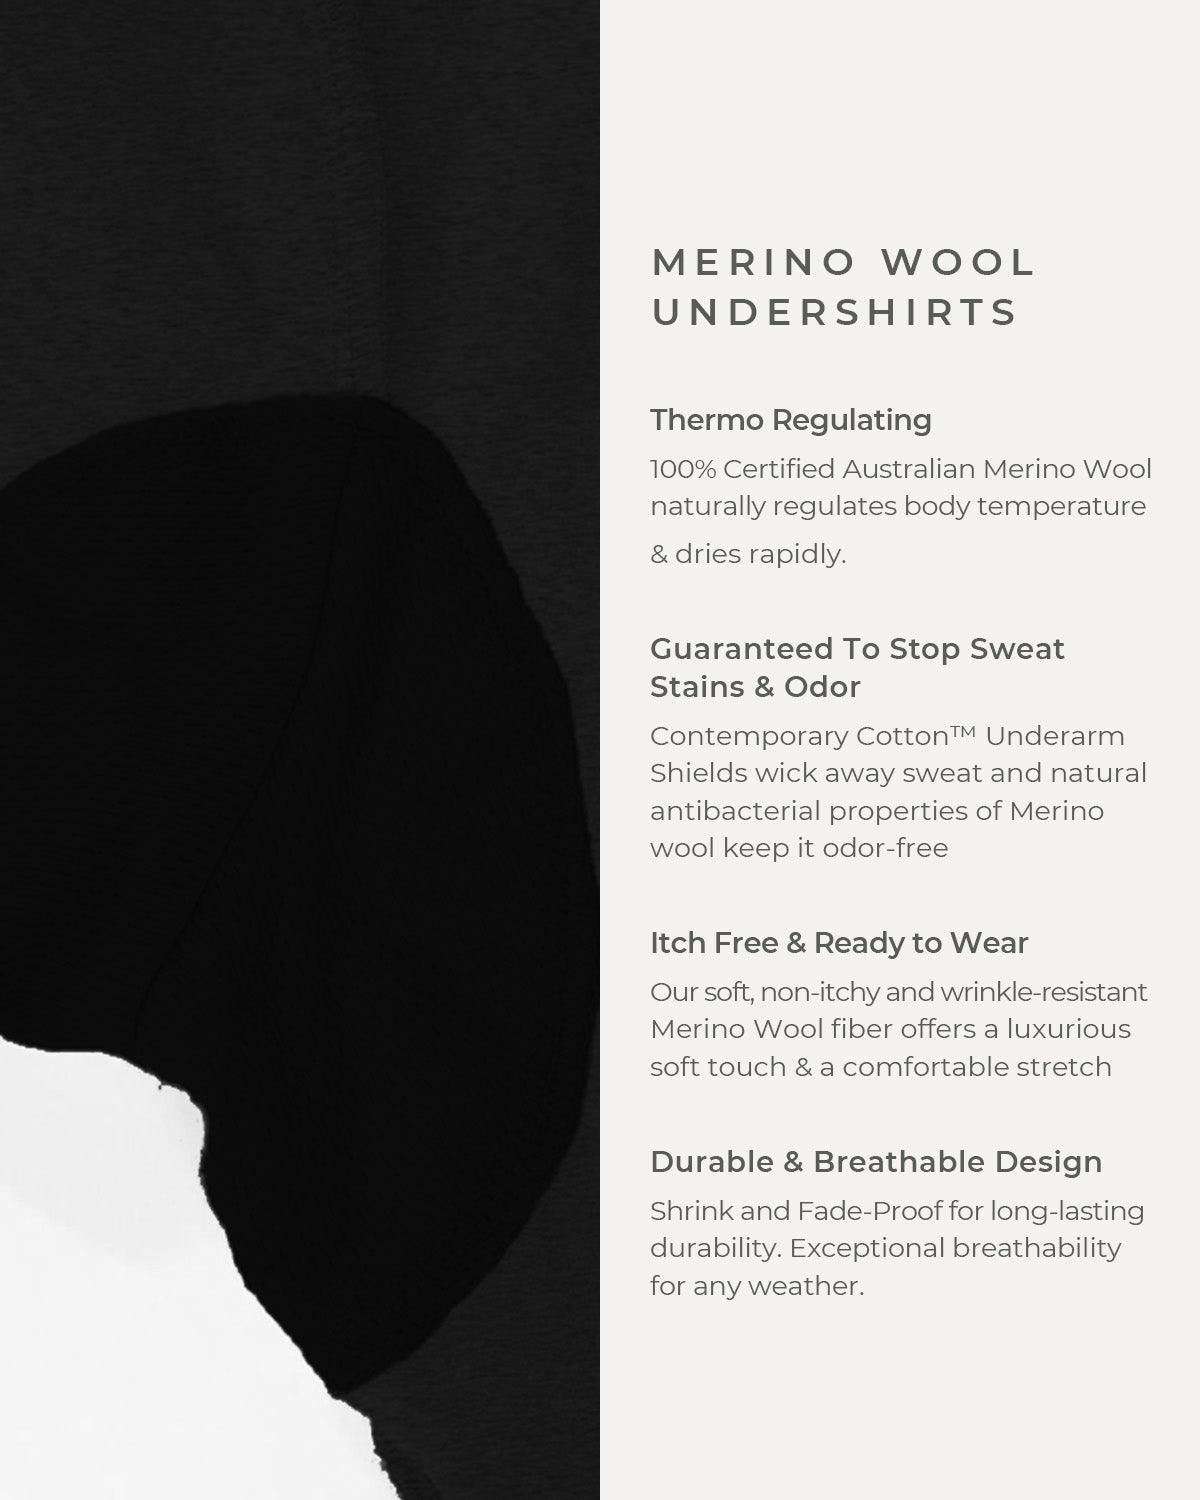 The Merino Wool Turtleneck Undershirt - Numi